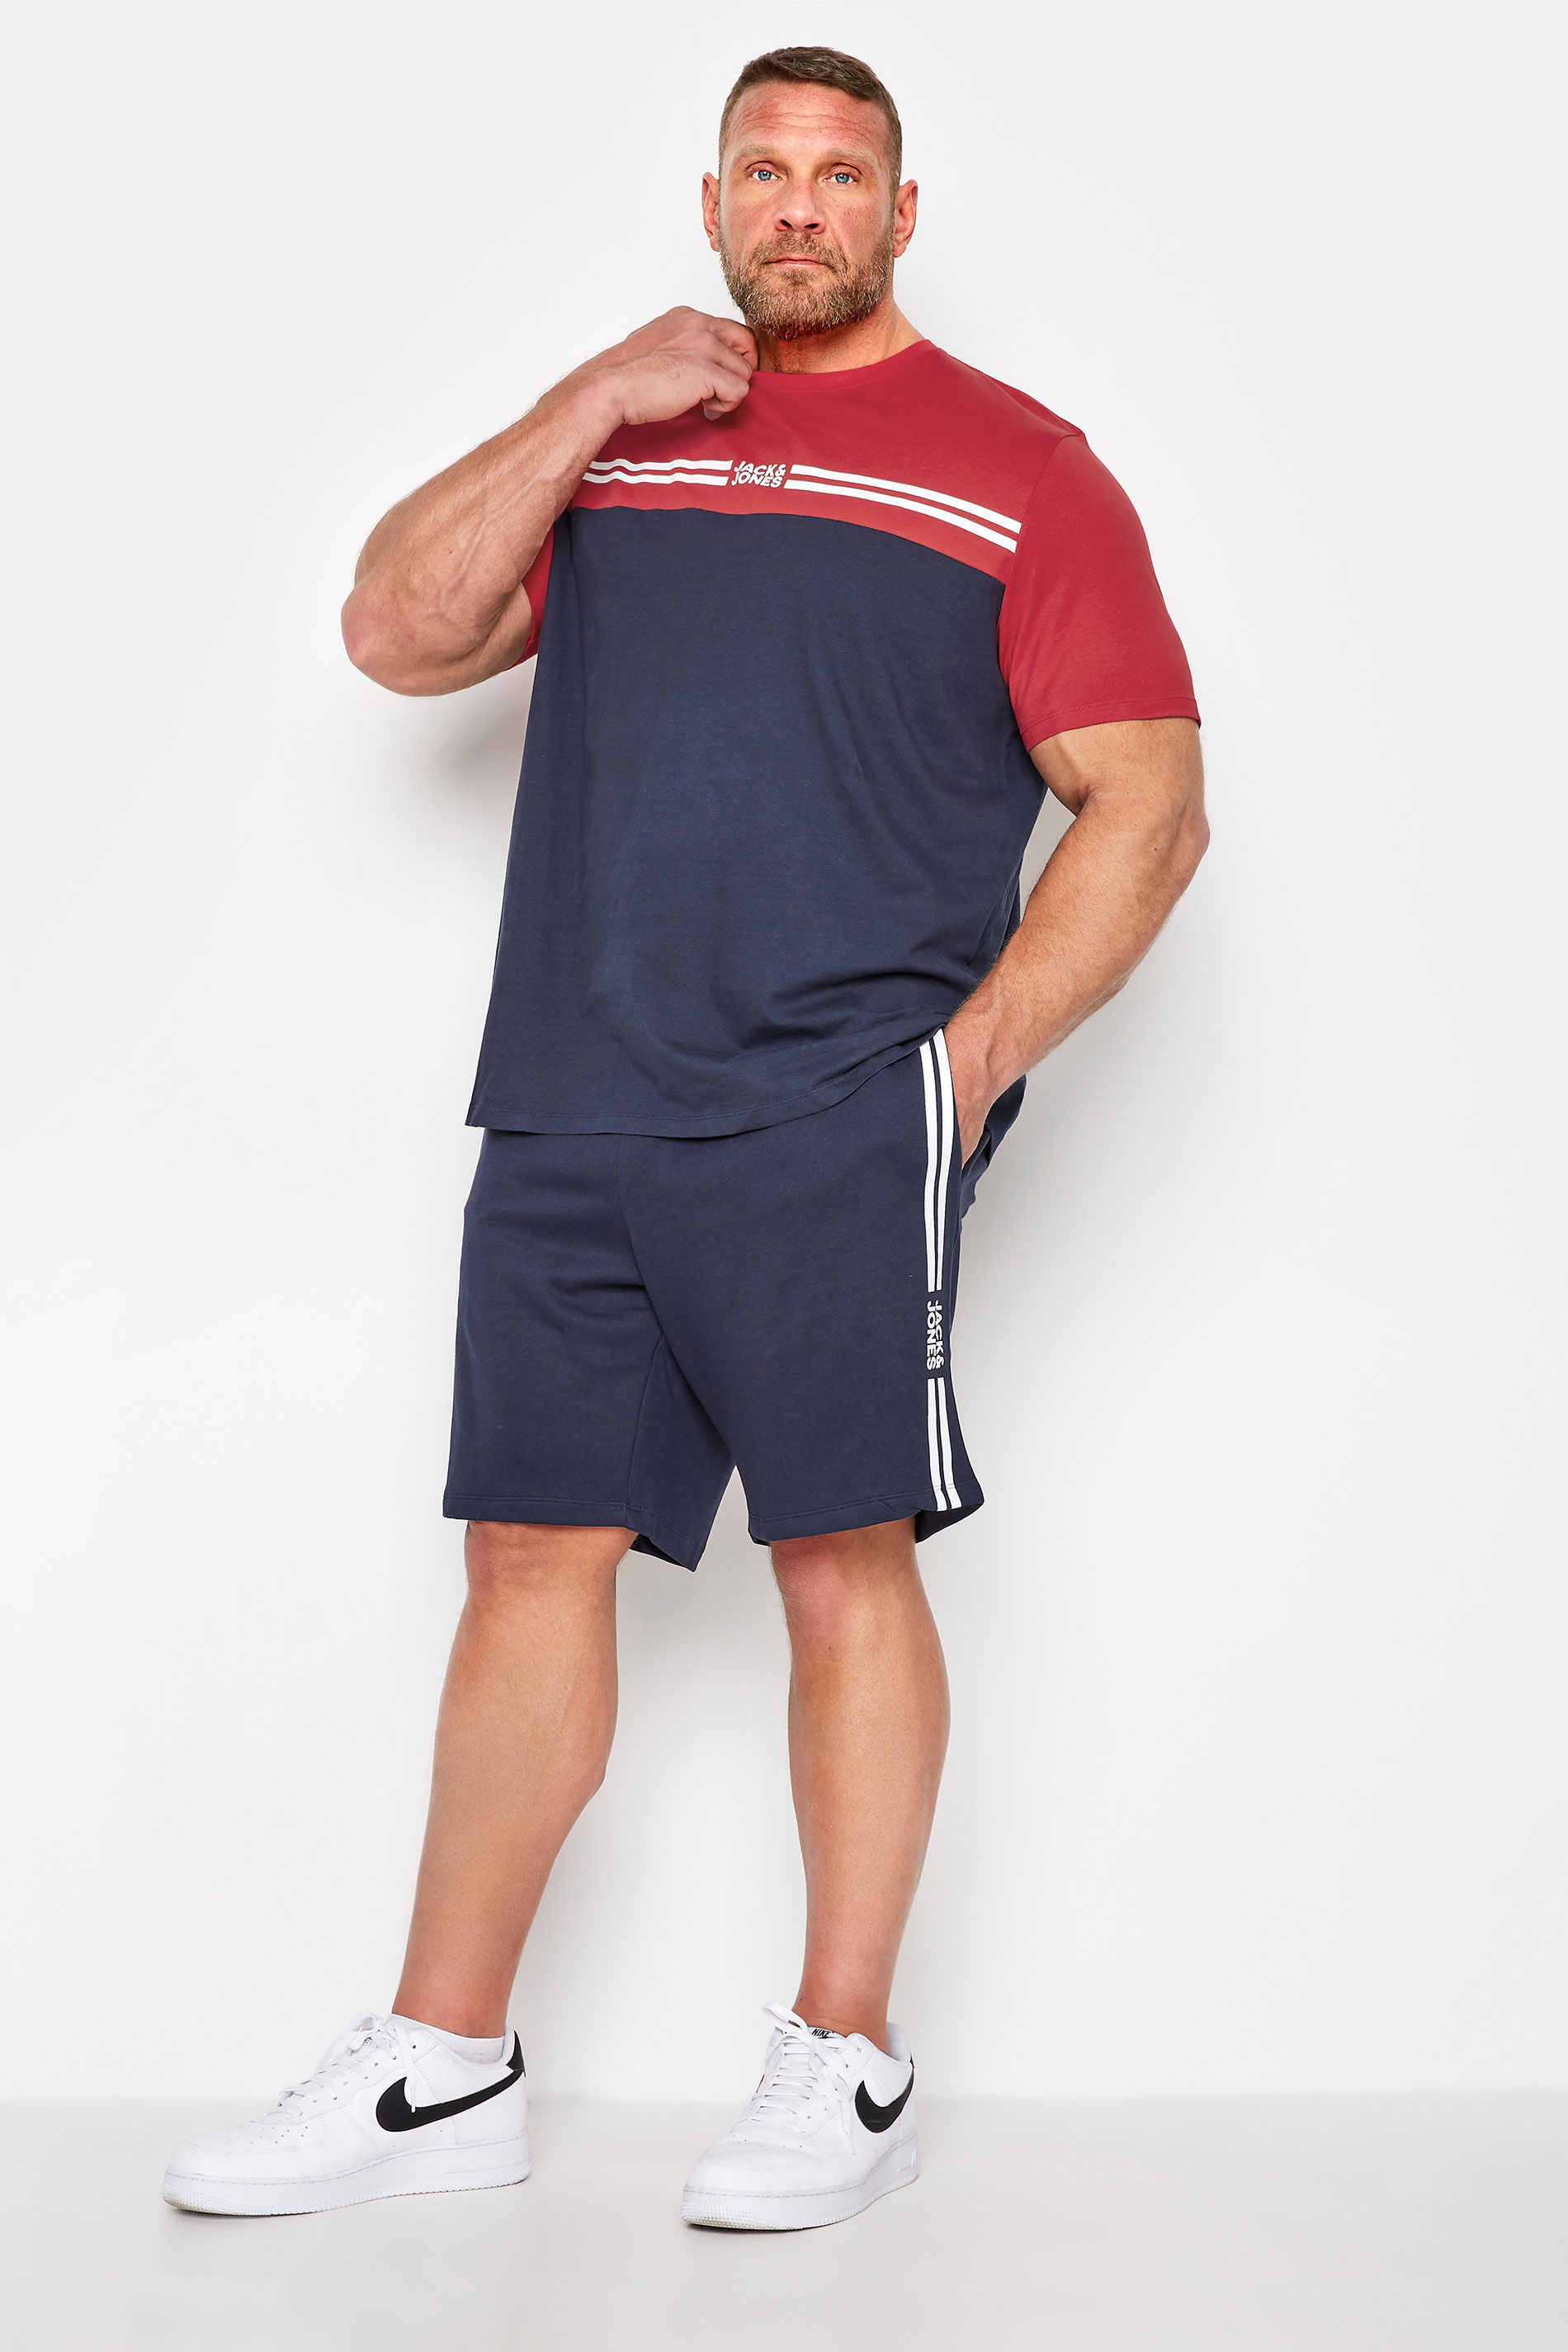 JACK & JONES Navy Blue & Red Steve T-Shirt & Shorts Set | BadRhino 1